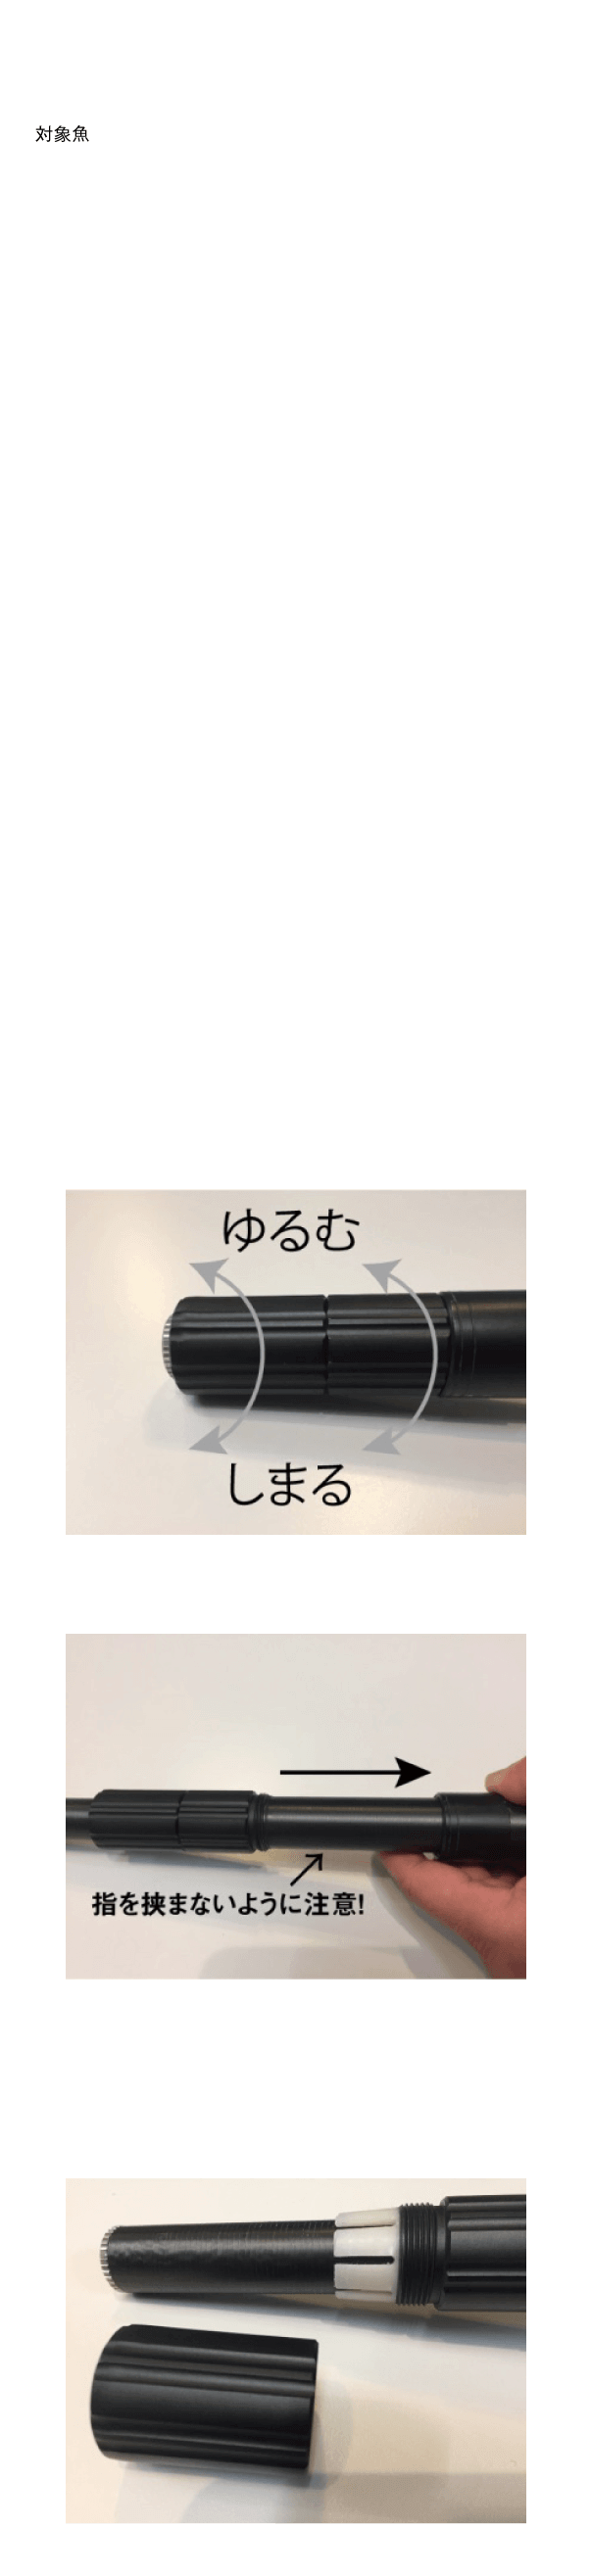 LANDING SHAFT | 装備 | APIA -アピア-